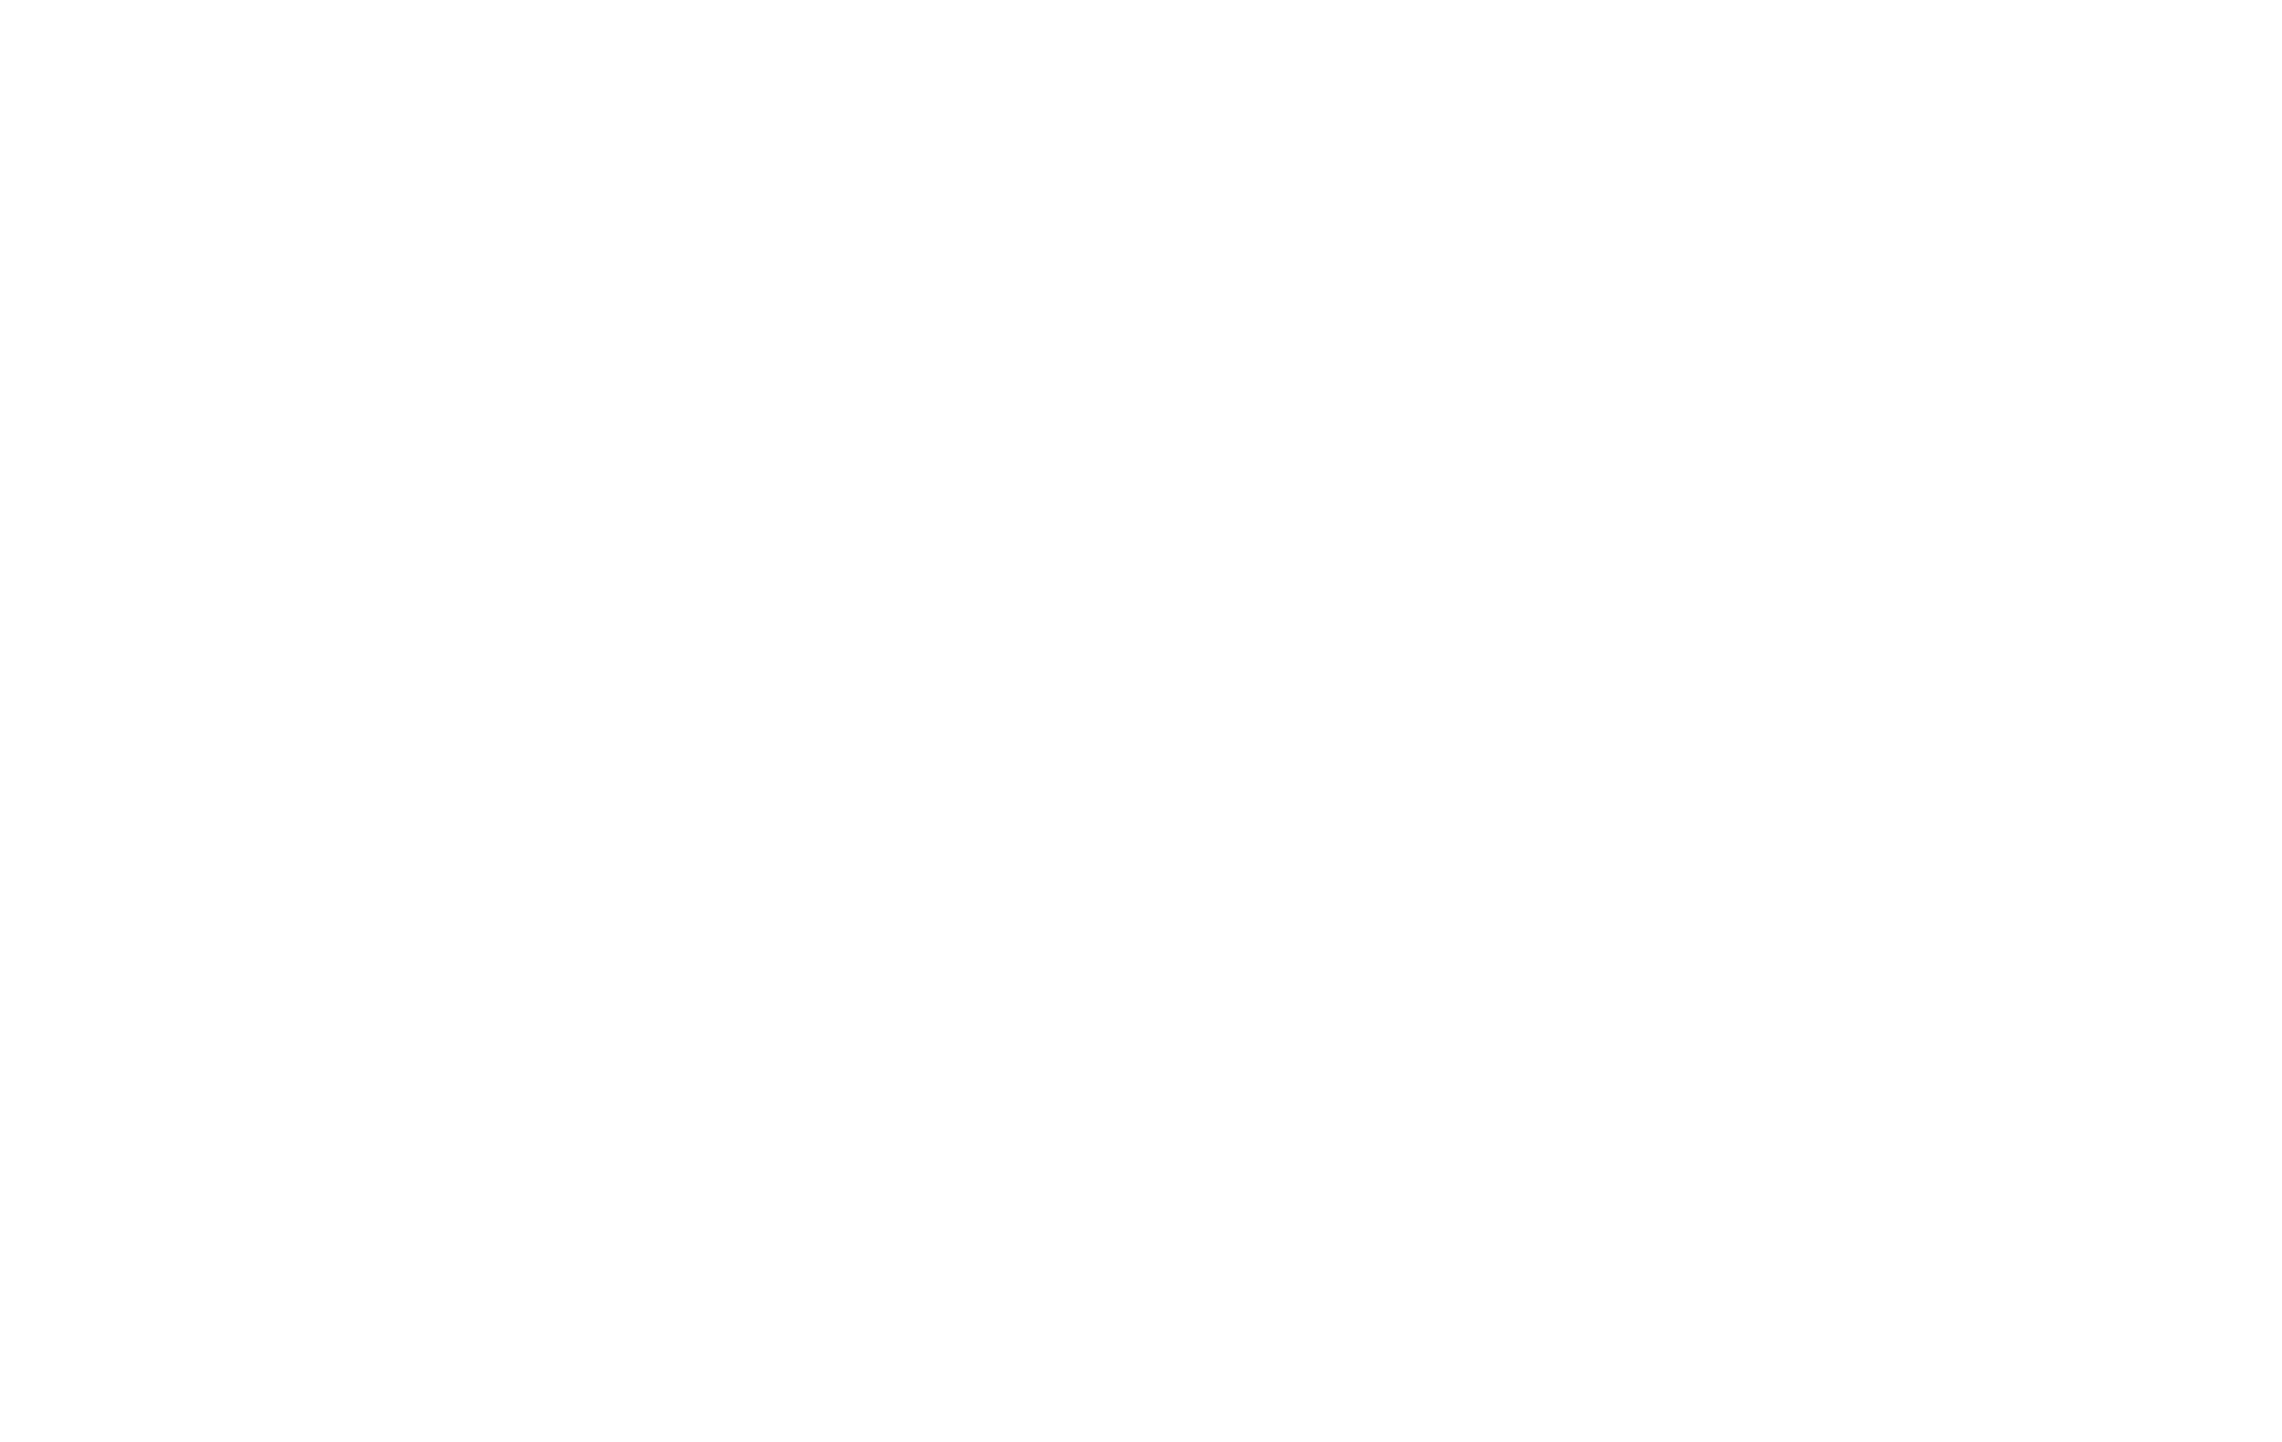 Kentucky Cheroots